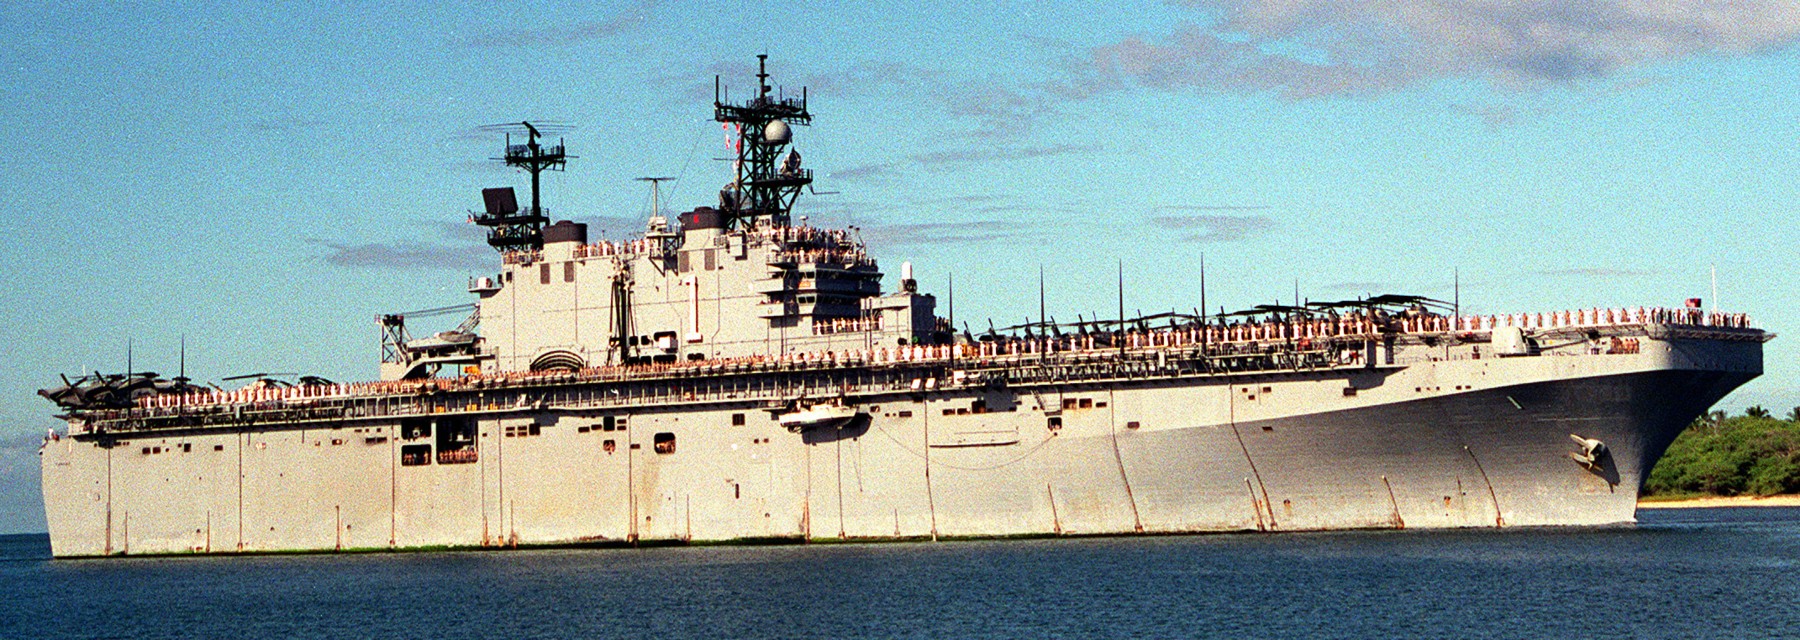 lha-1 uss tarawa amphibious assault ship us navy 77 pearl harbor